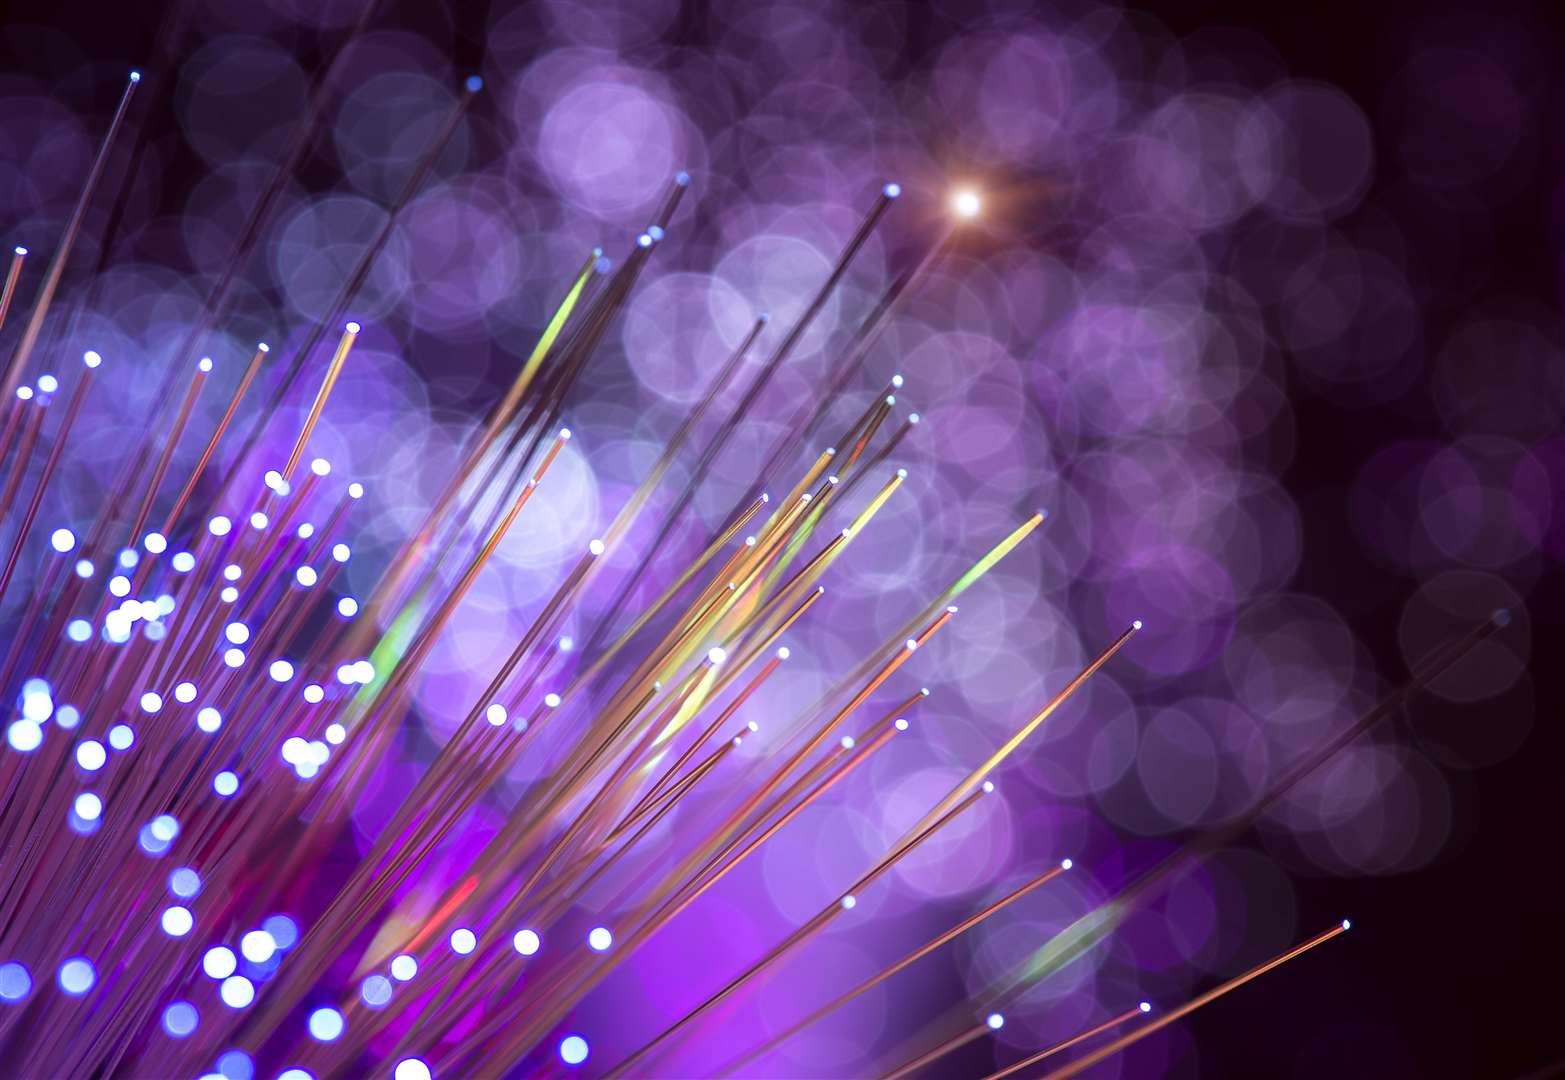 Ultrafast full fibre broadband is reaching across Kent